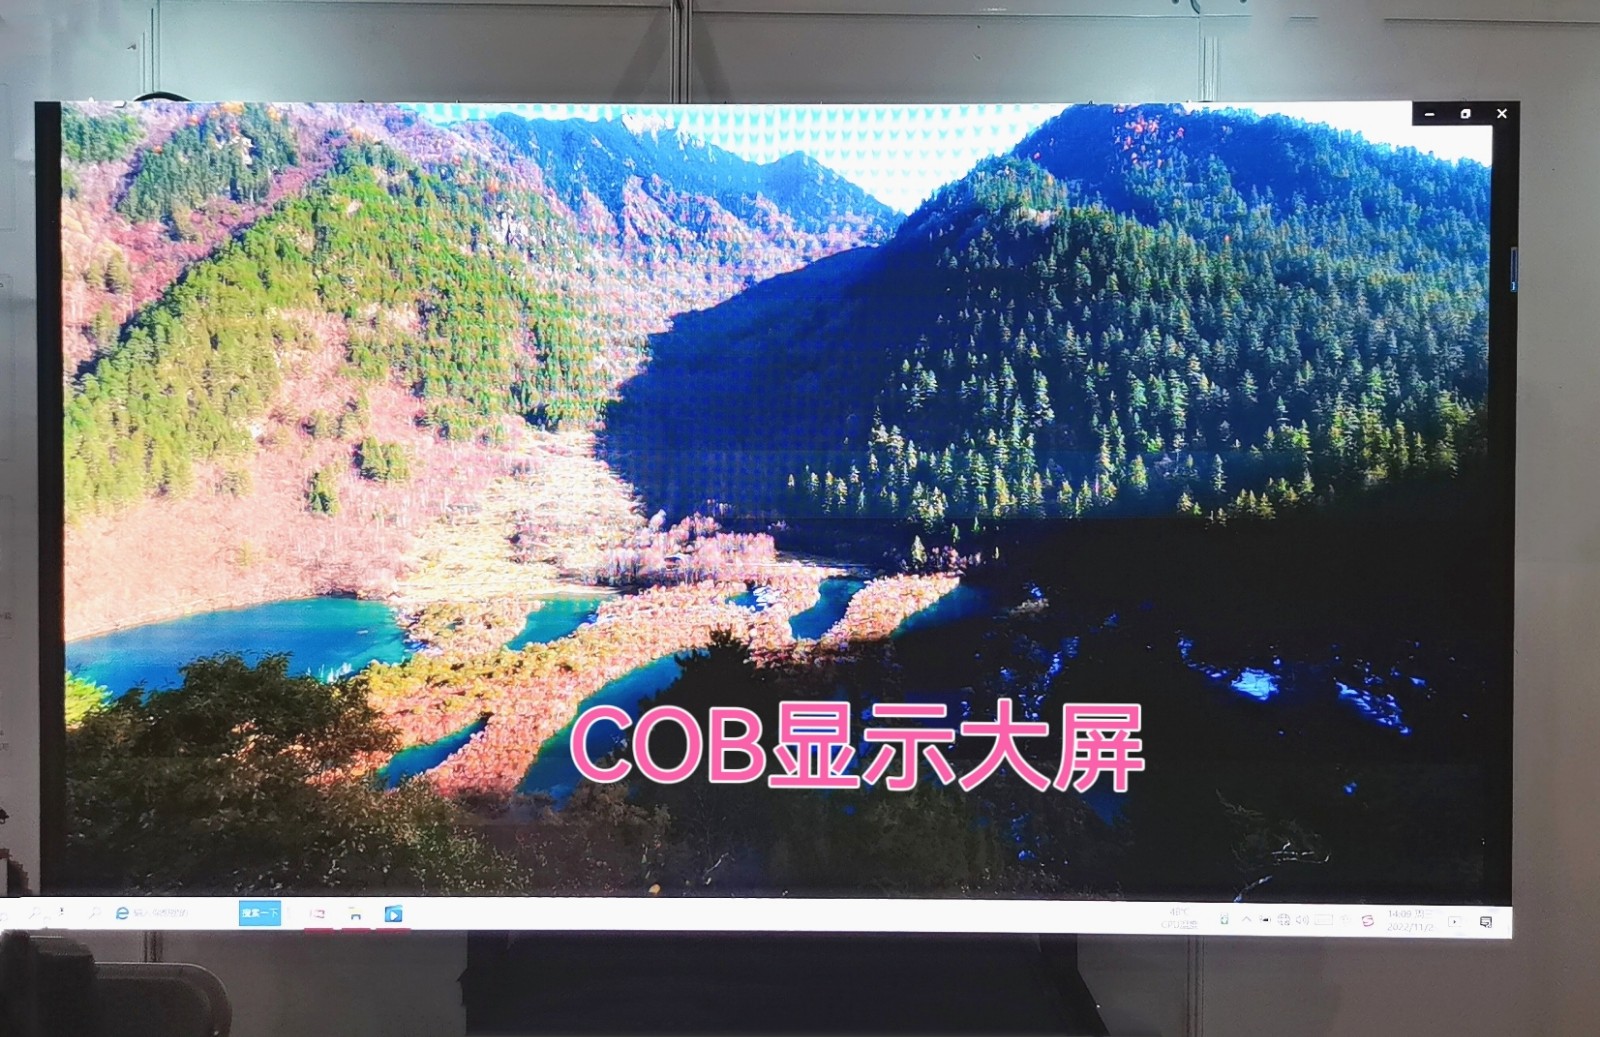 COTV直播-浙江国友工程技术有限公司专业研发生产COB显示大屏、通讯系统、SMT贴片加工等产品，欢迎大家光临！